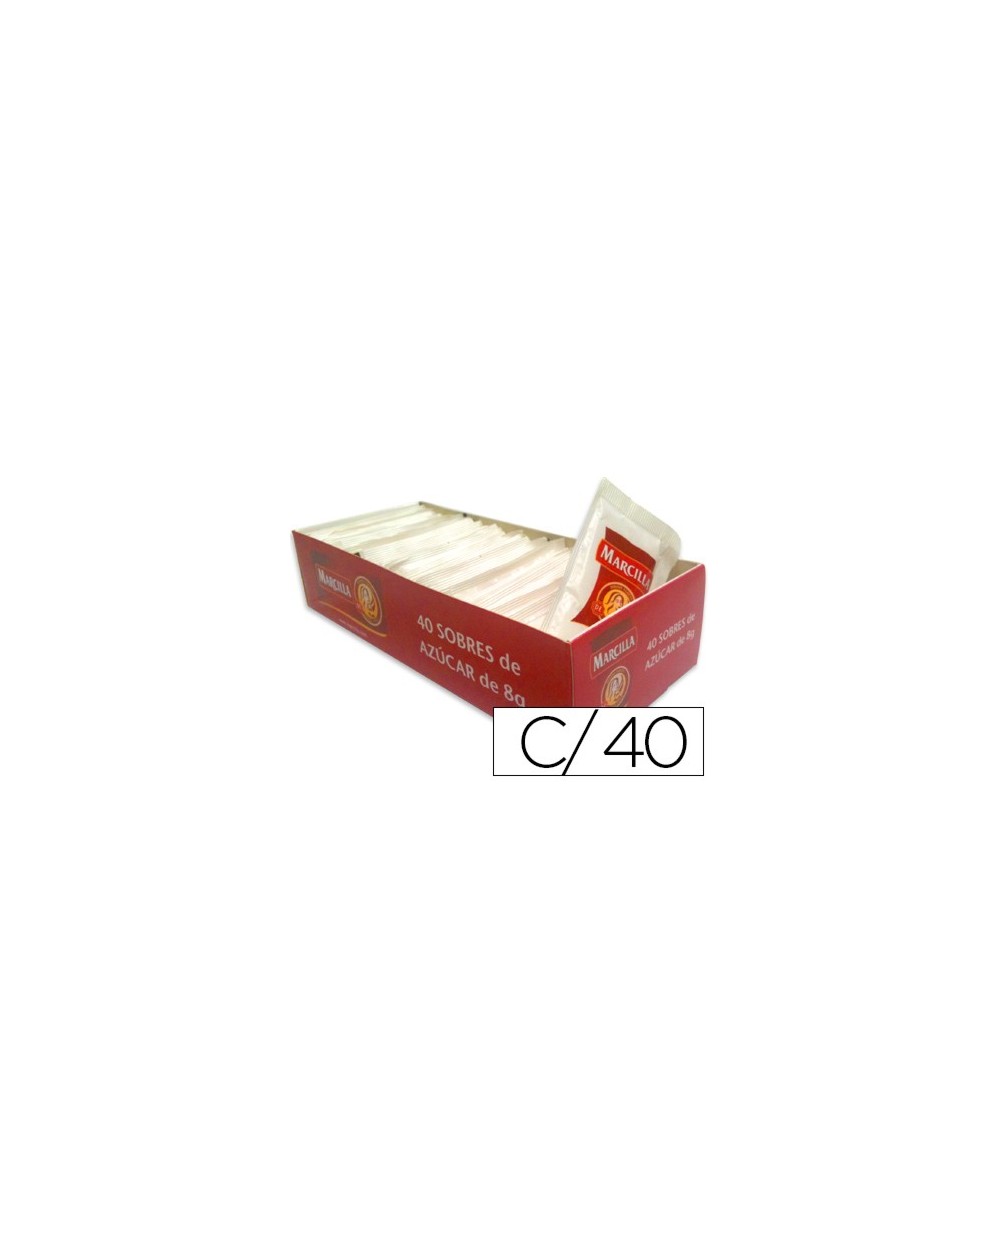 Azucar blanca en sobres de 8g caja de 40 sobres